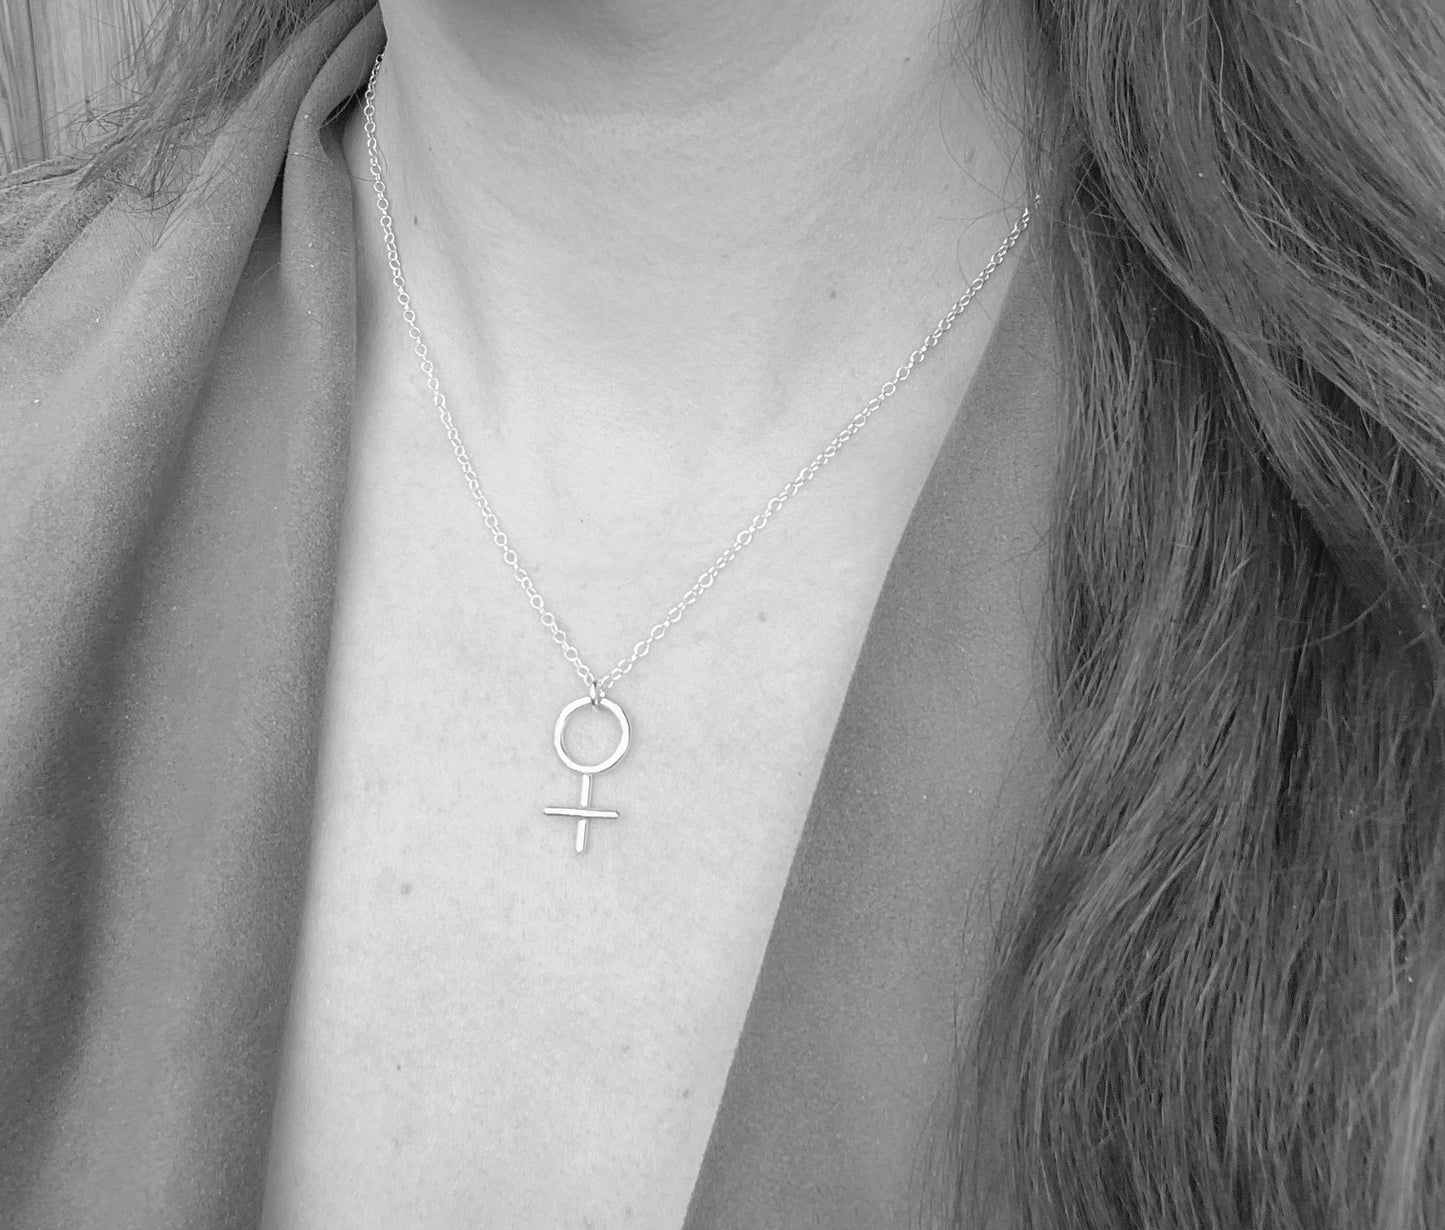 Silver female symbol necklace 